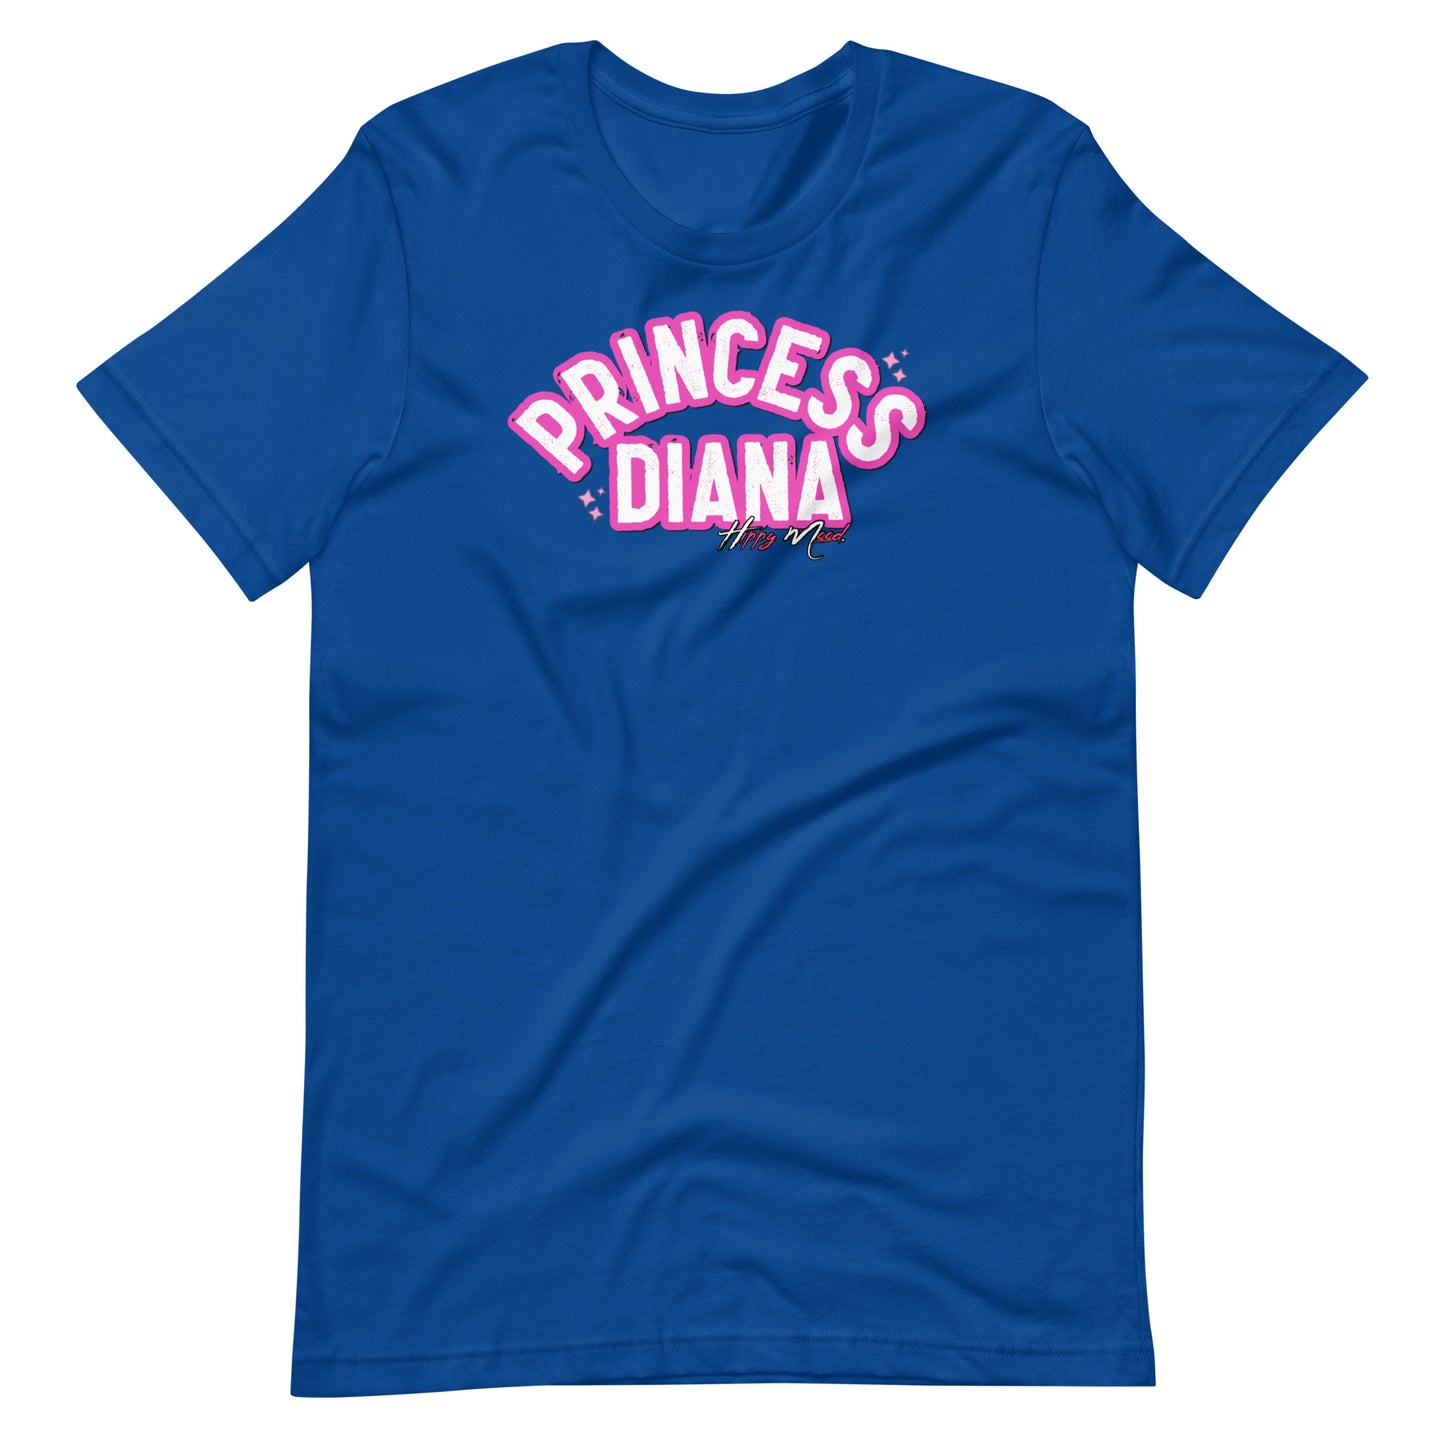 Princess Diana | Unisex T-shirt